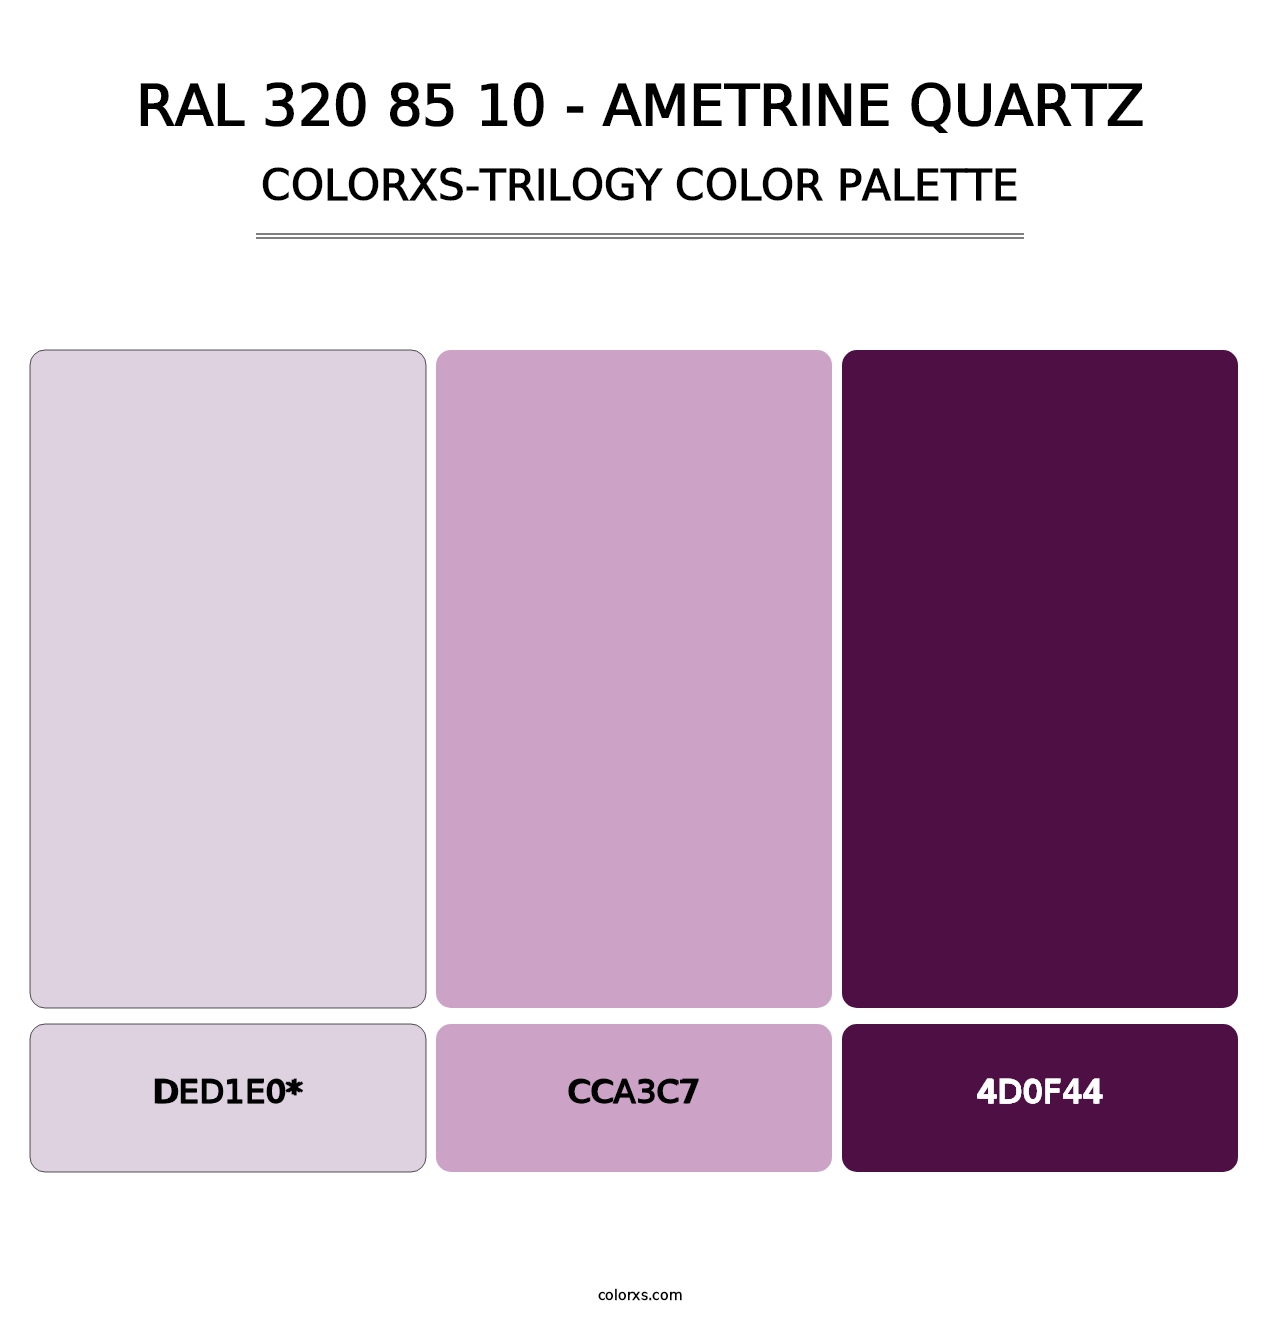 RAL 320 85 10 - Ametrine Quartz - Colorxs Trilogy Palette